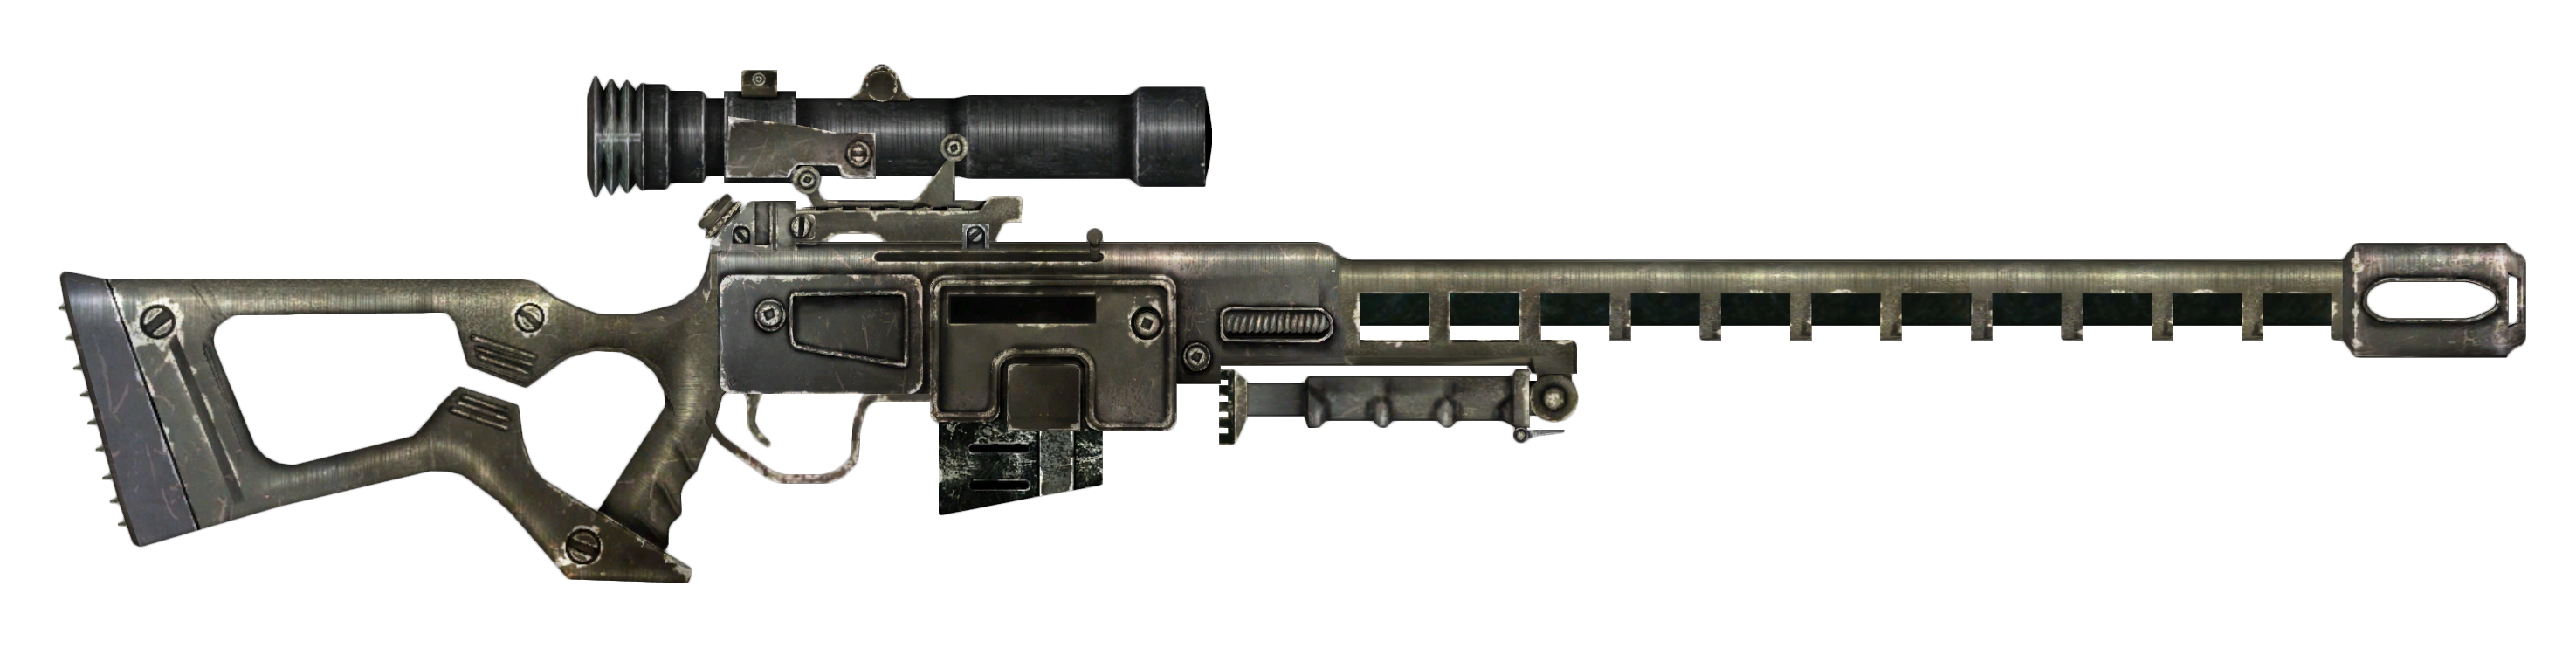 Sniper Rifle #16